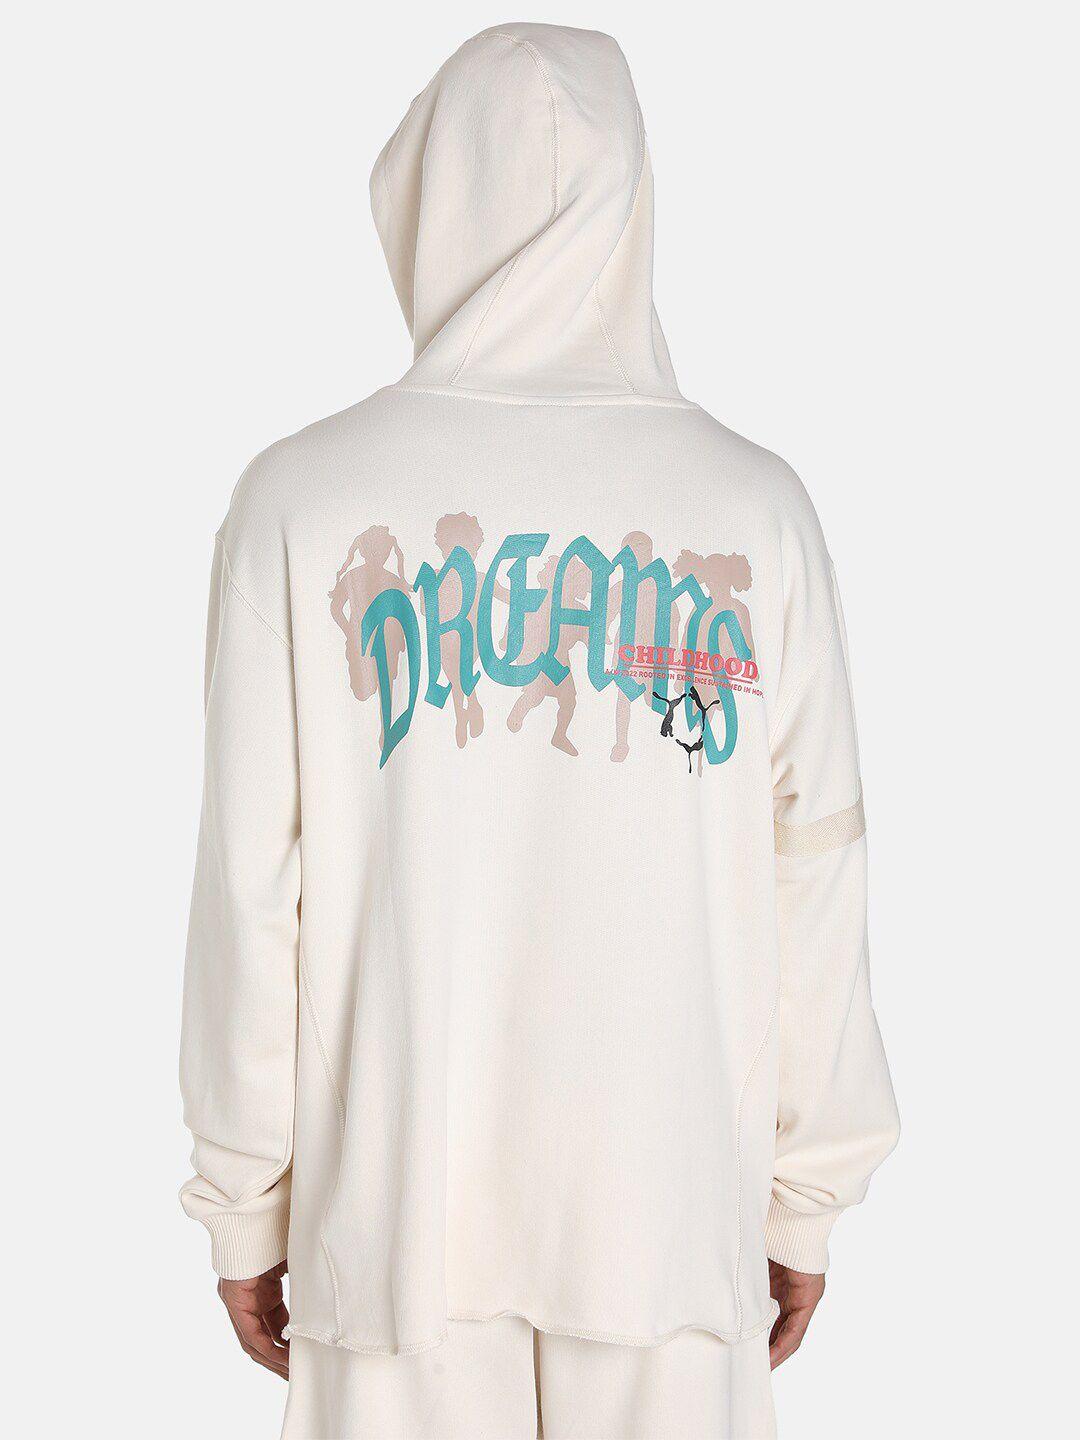 Puma x CHILDHOOD DREAMS Graphic Printed Cotton Basketball Hooded Sweatshirt